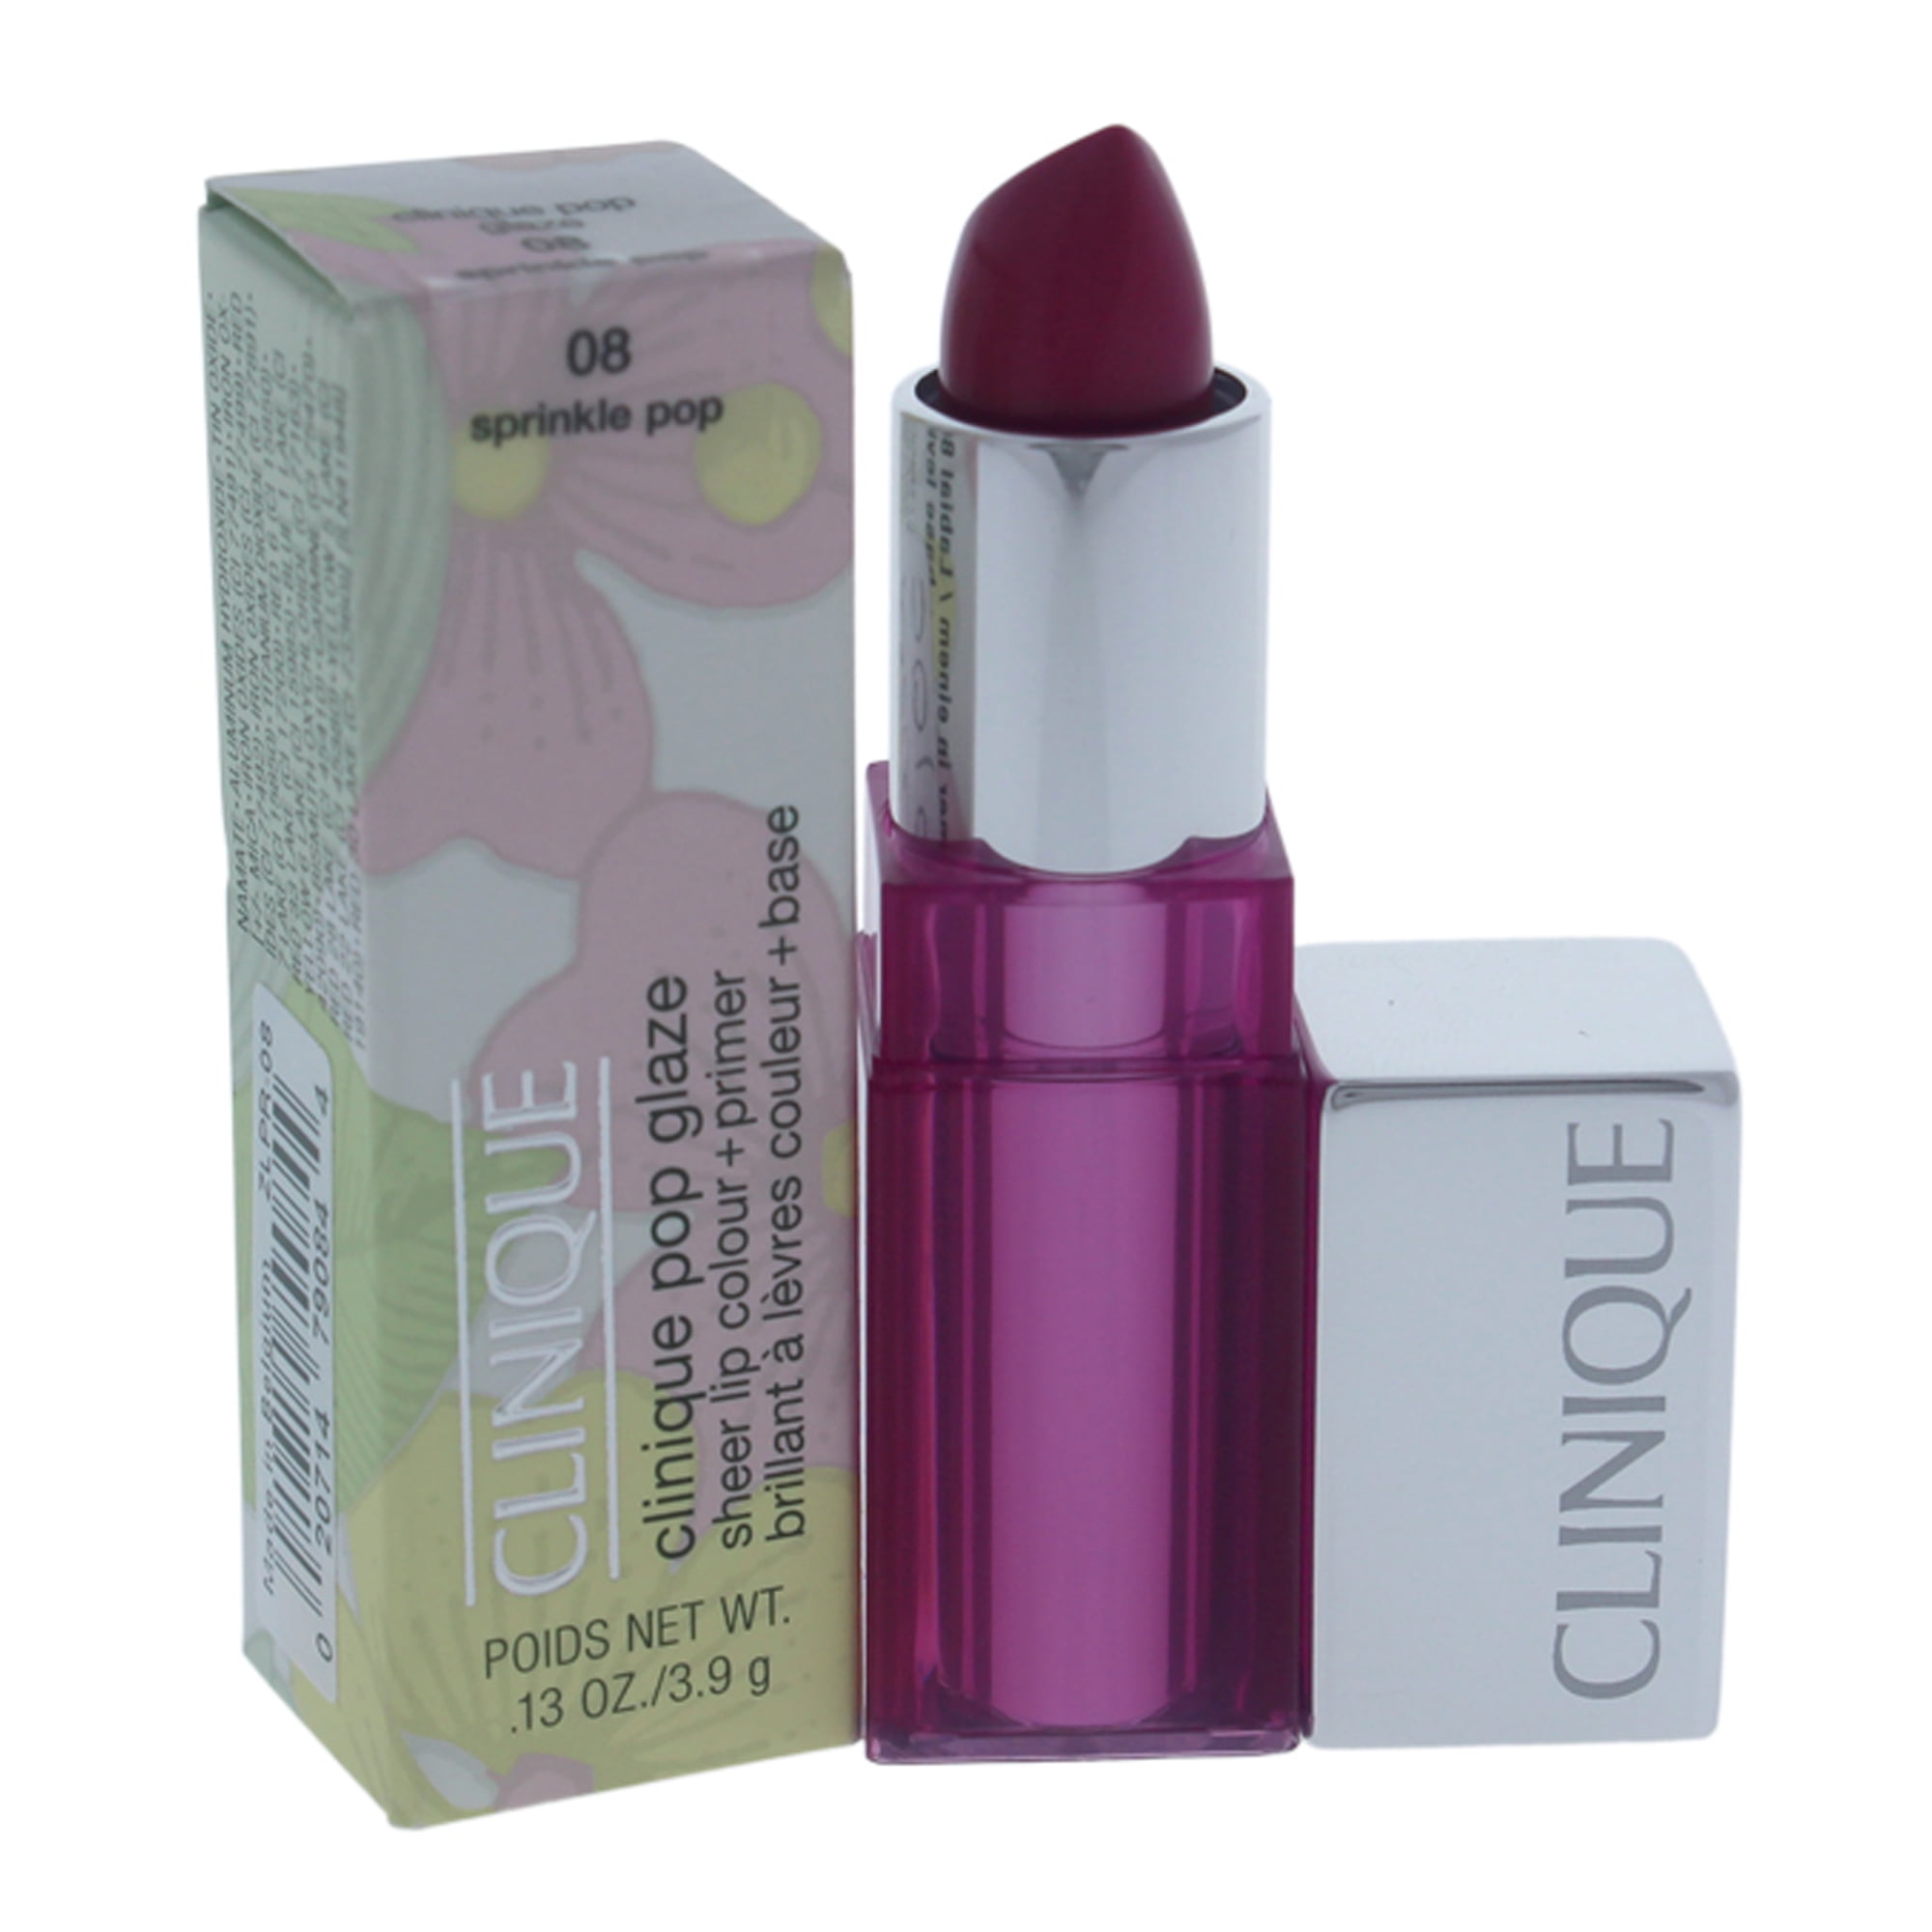 Manifold Tentacle fusionere Clinique Pop Glaze Sheer Lip Colour + Primer - # 08 Sprinkle Pop by Clinique  for Women - 0.13 oz Lipstick - Walmart.com